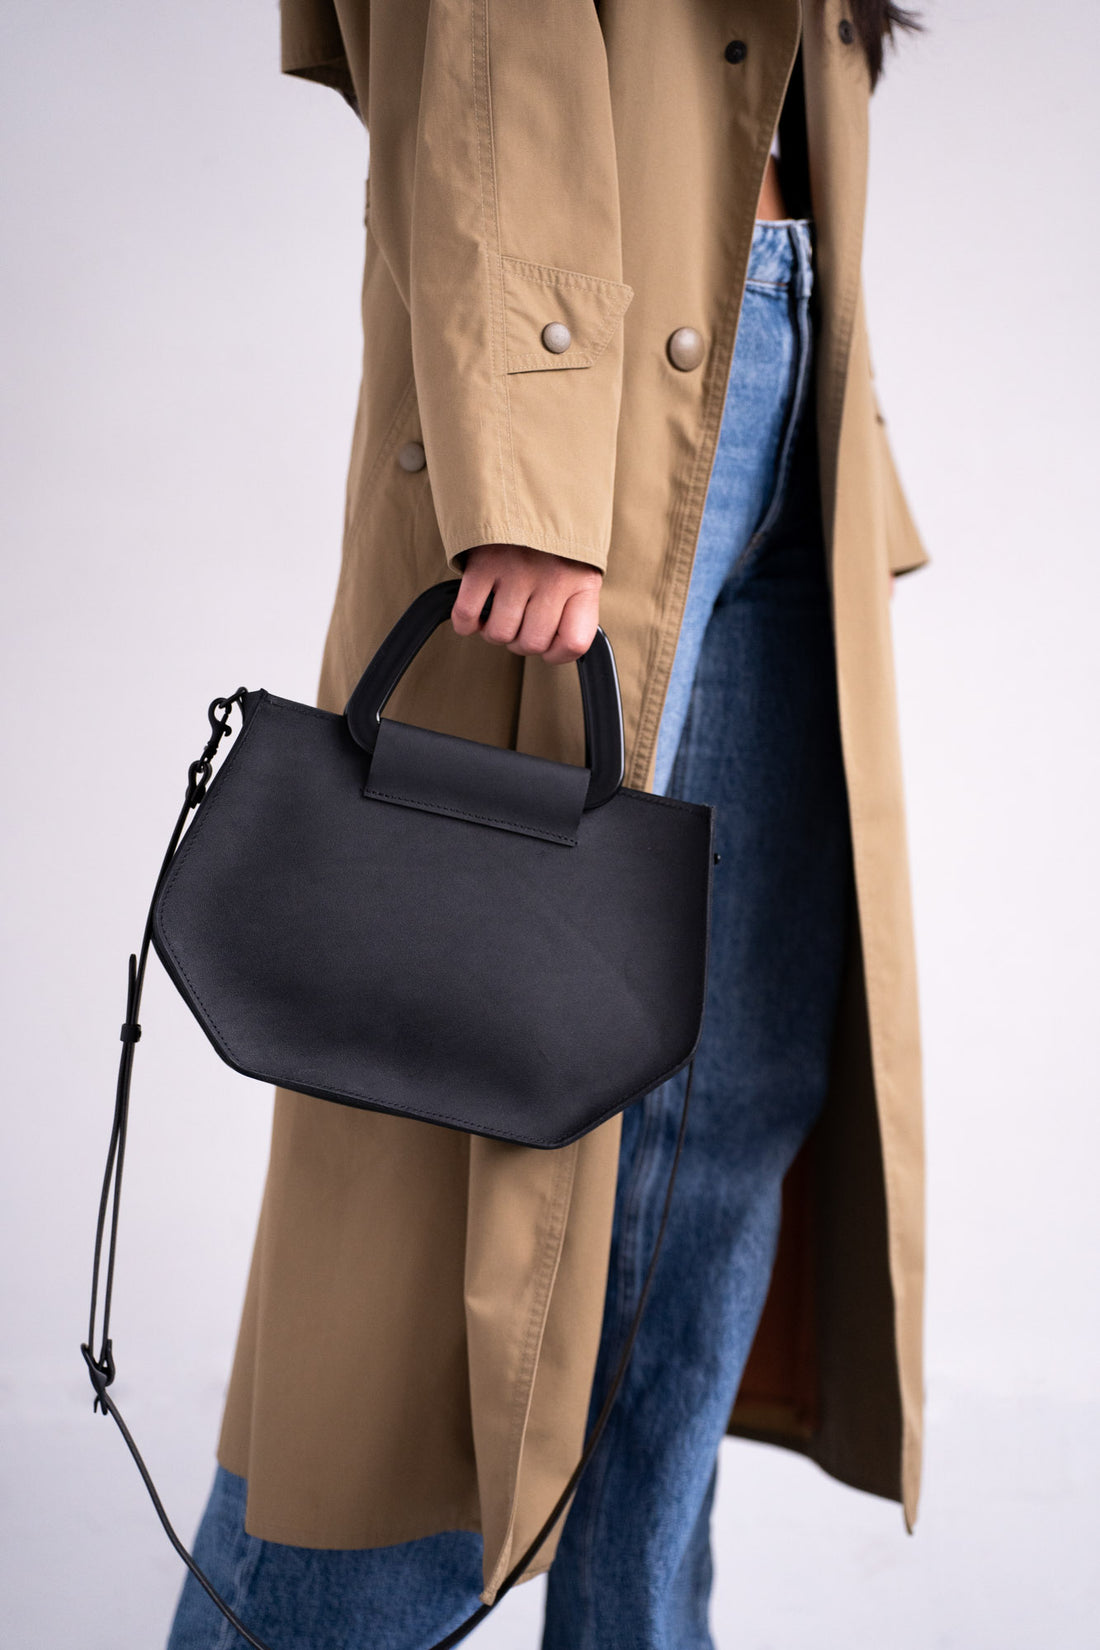 Zoe - the classic handbag